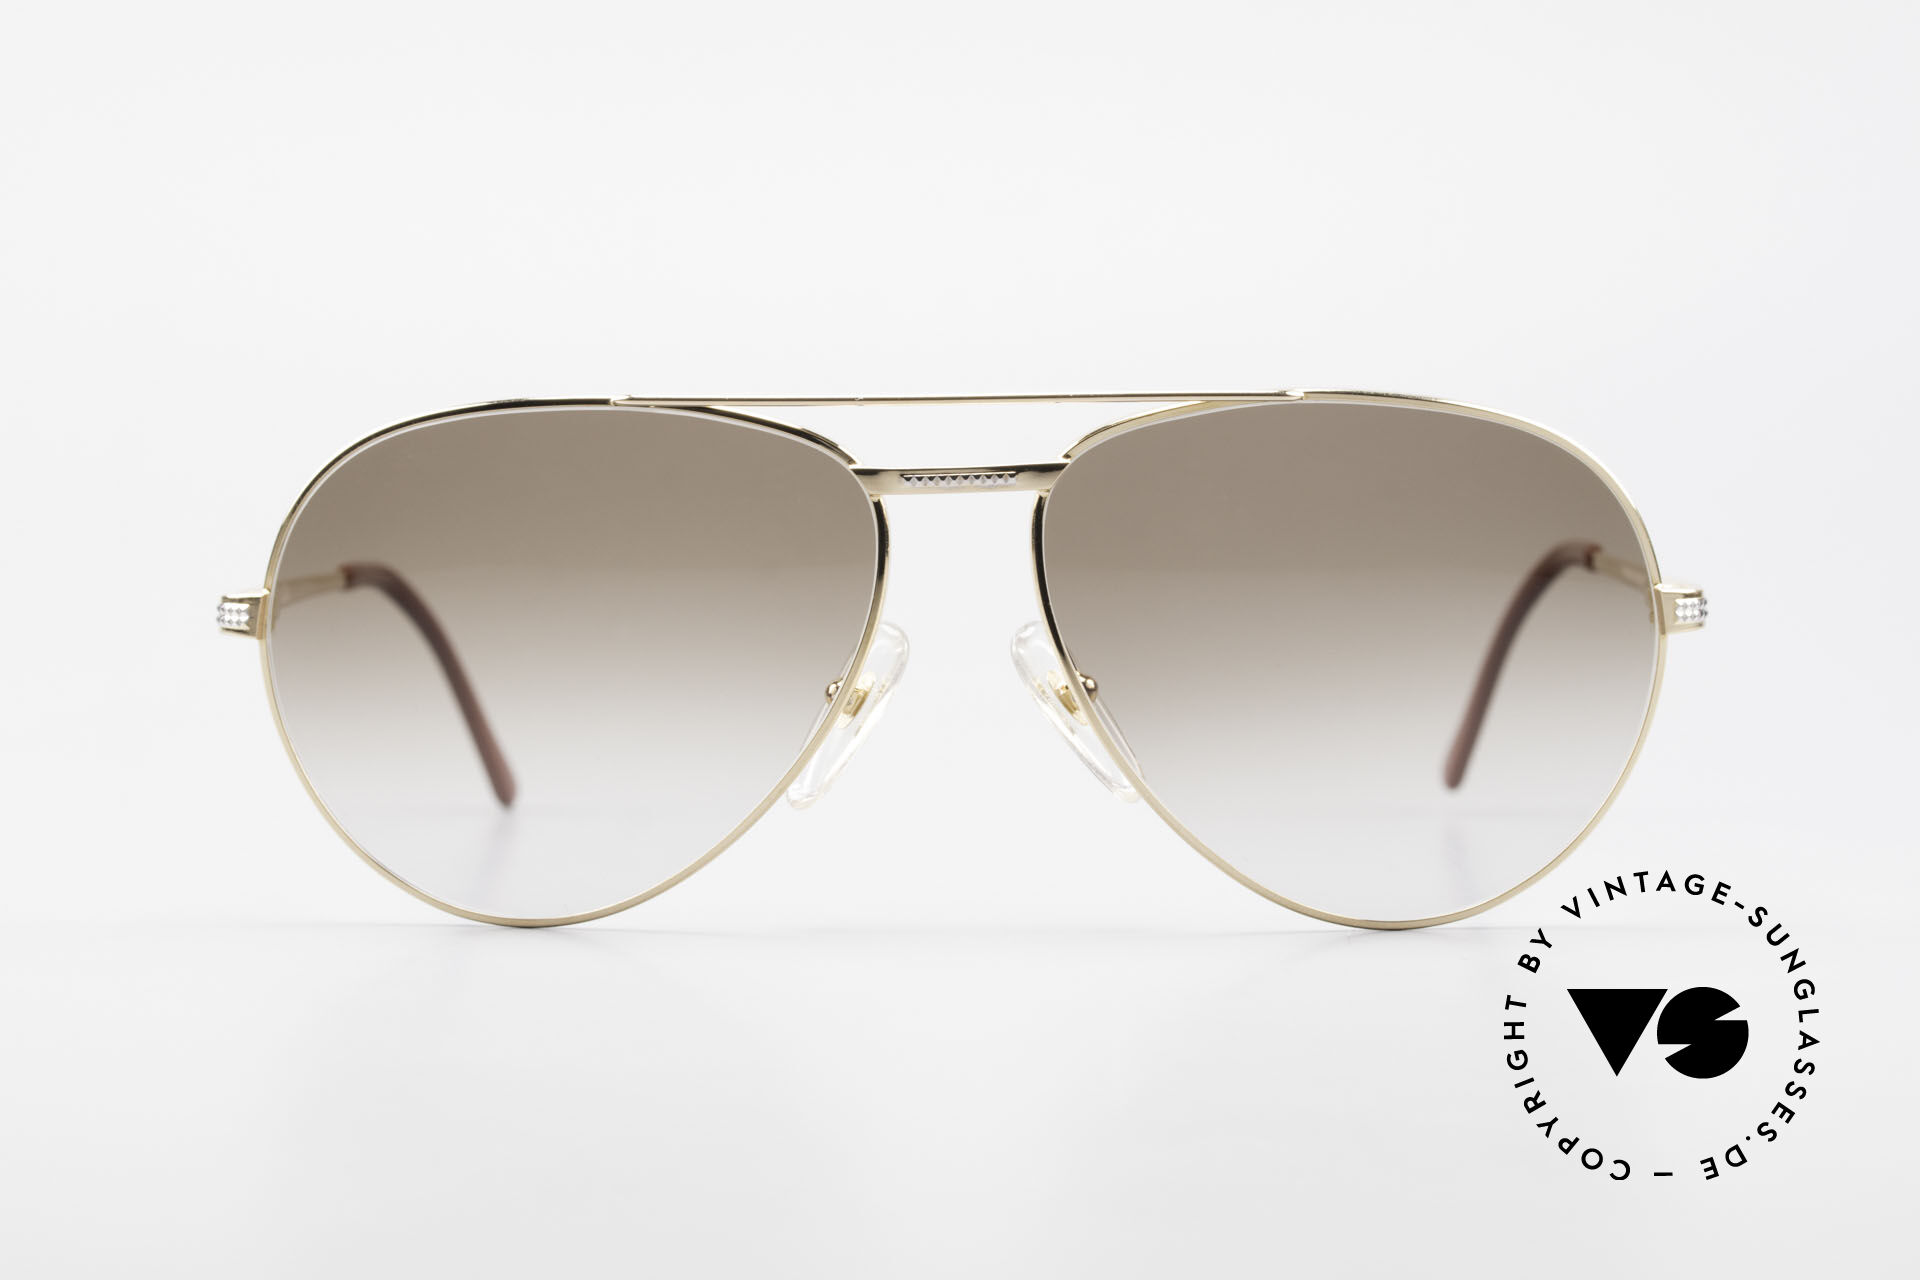 Sunglasses Christian Dior 2780 Gold-Plated 90's Aviator Frame